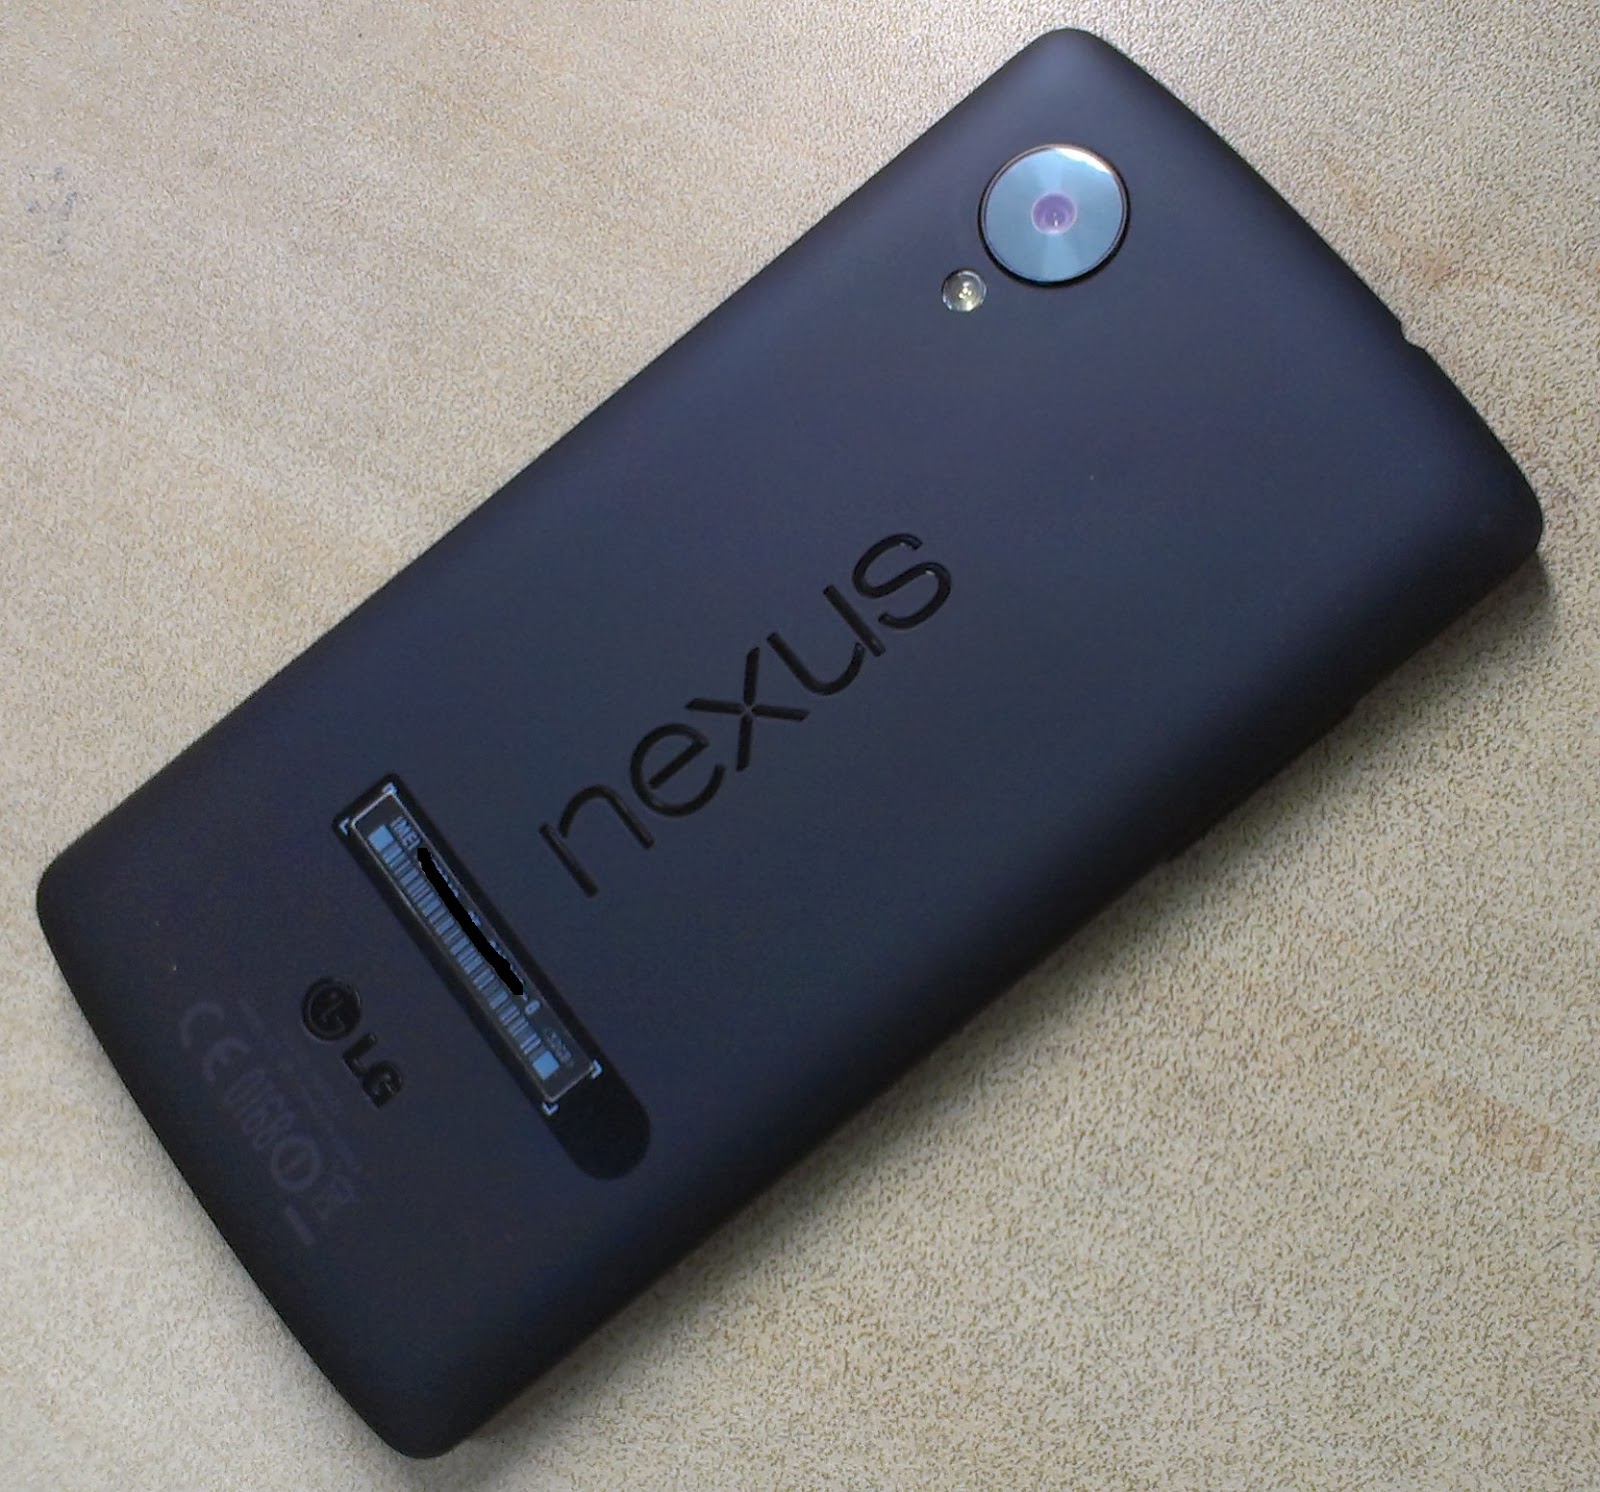 Google+LG+Nexus+5+Android+KitKat+Review+Handson+Detailed+Benchmark++%252811%2529.jpg